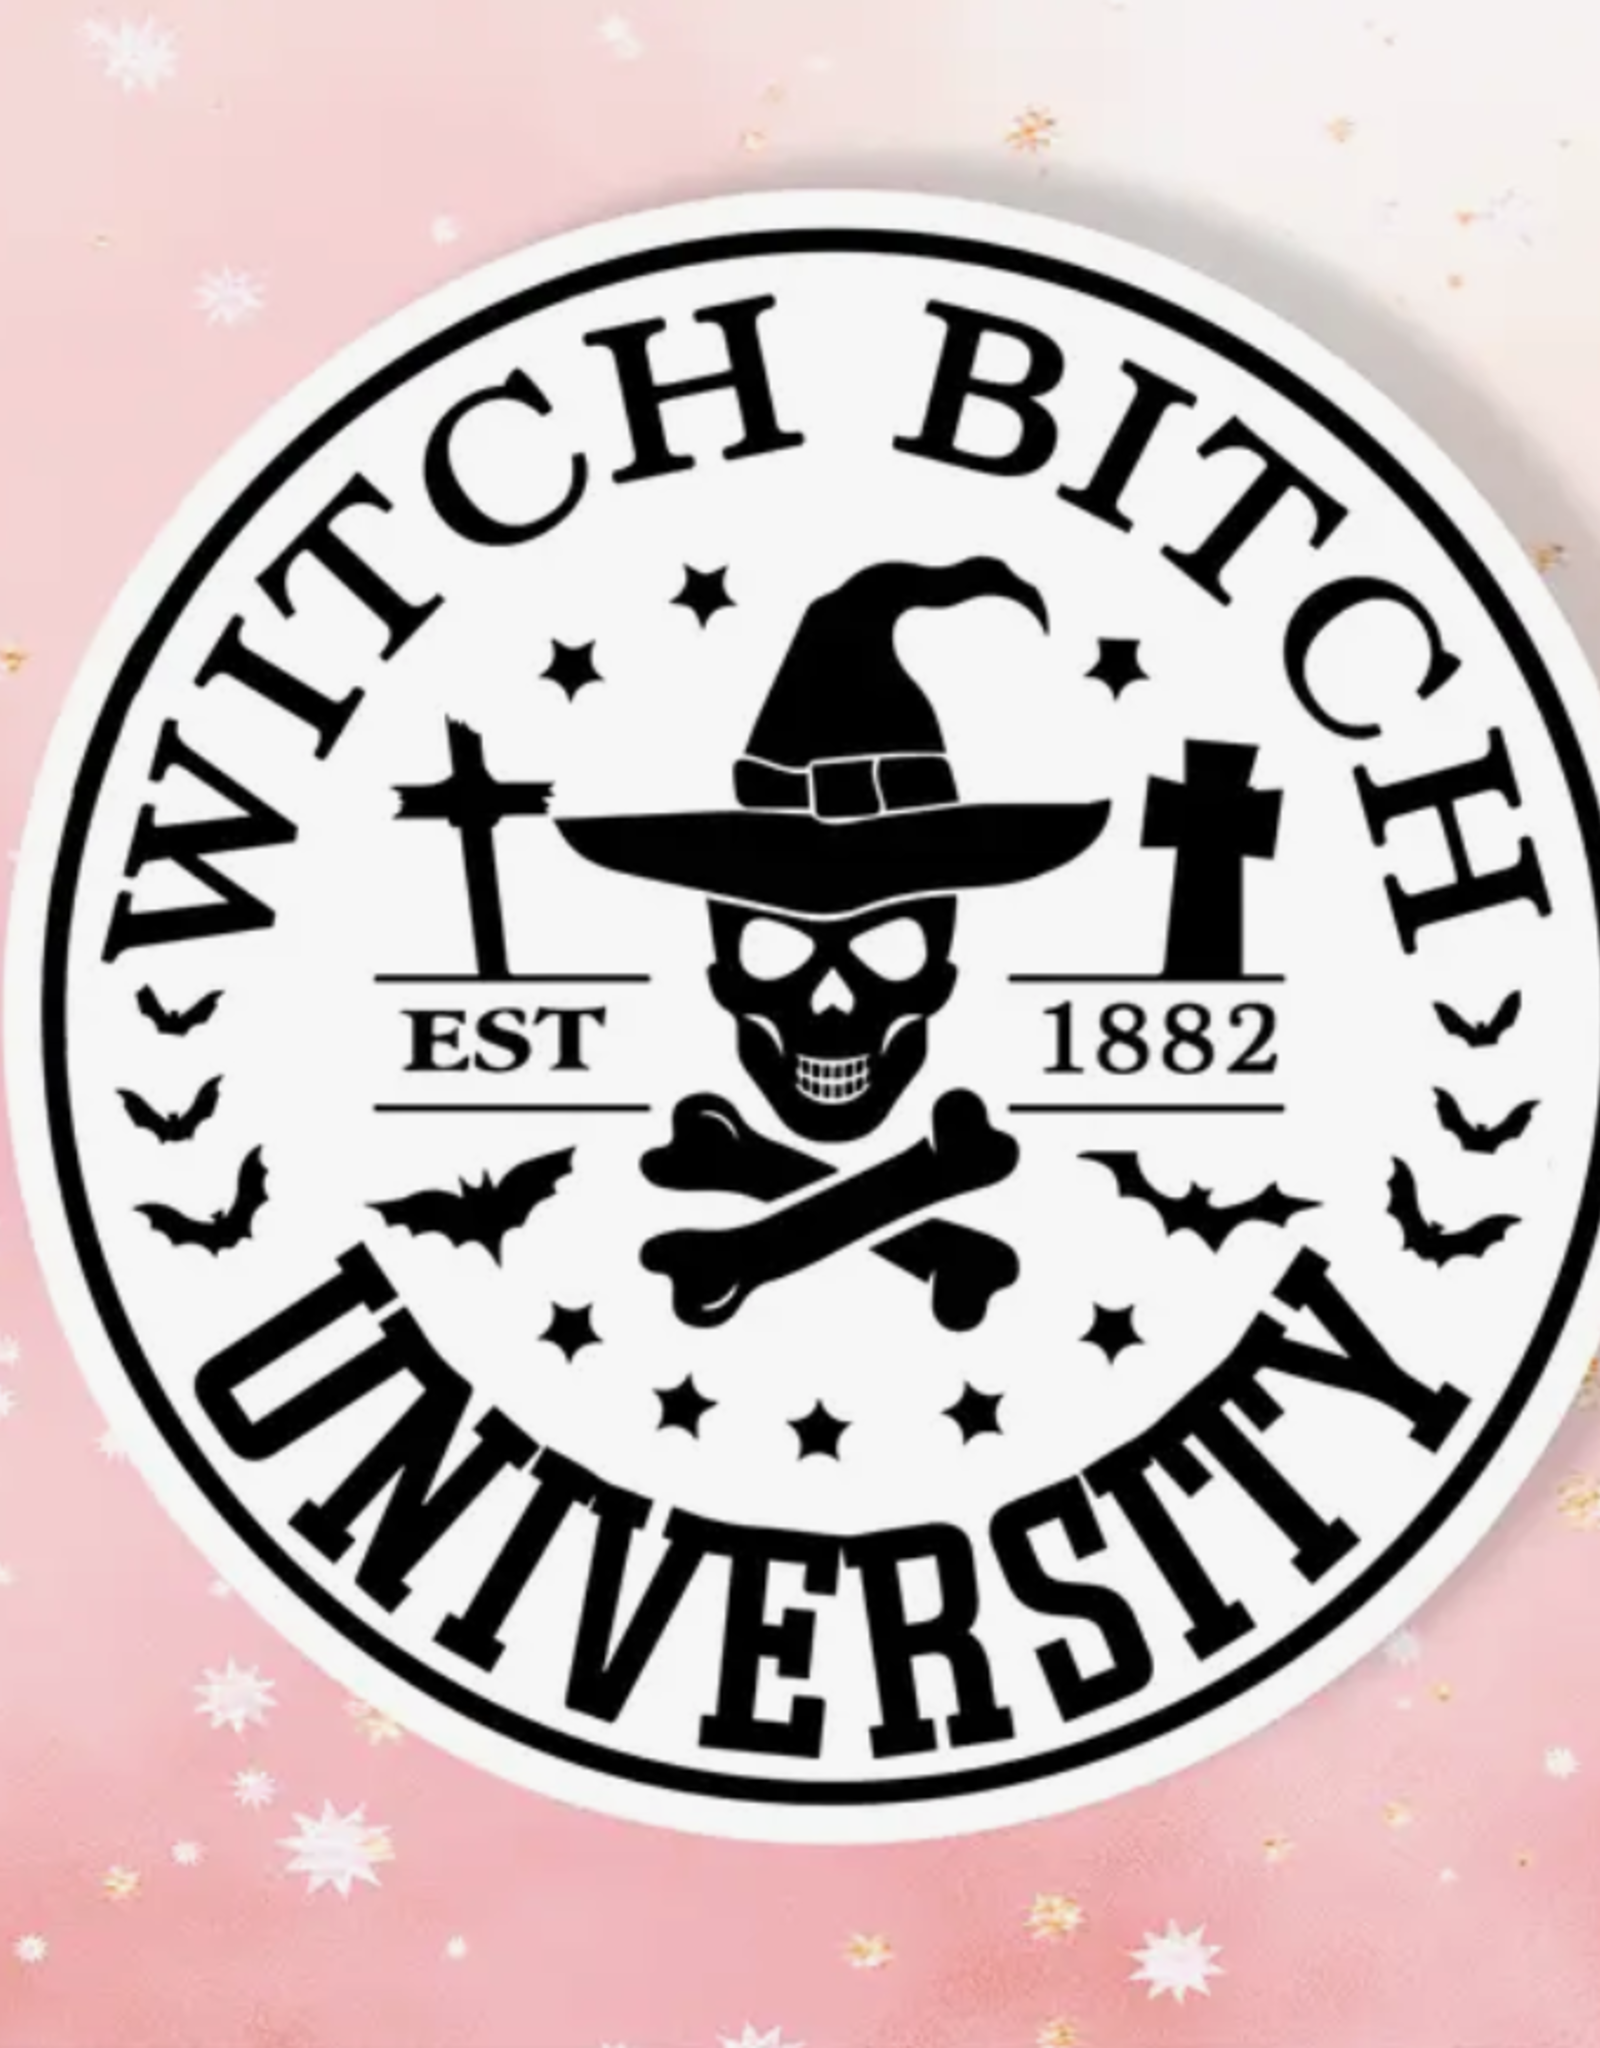 Witch Bitch University Sticker Metaphysical Intention